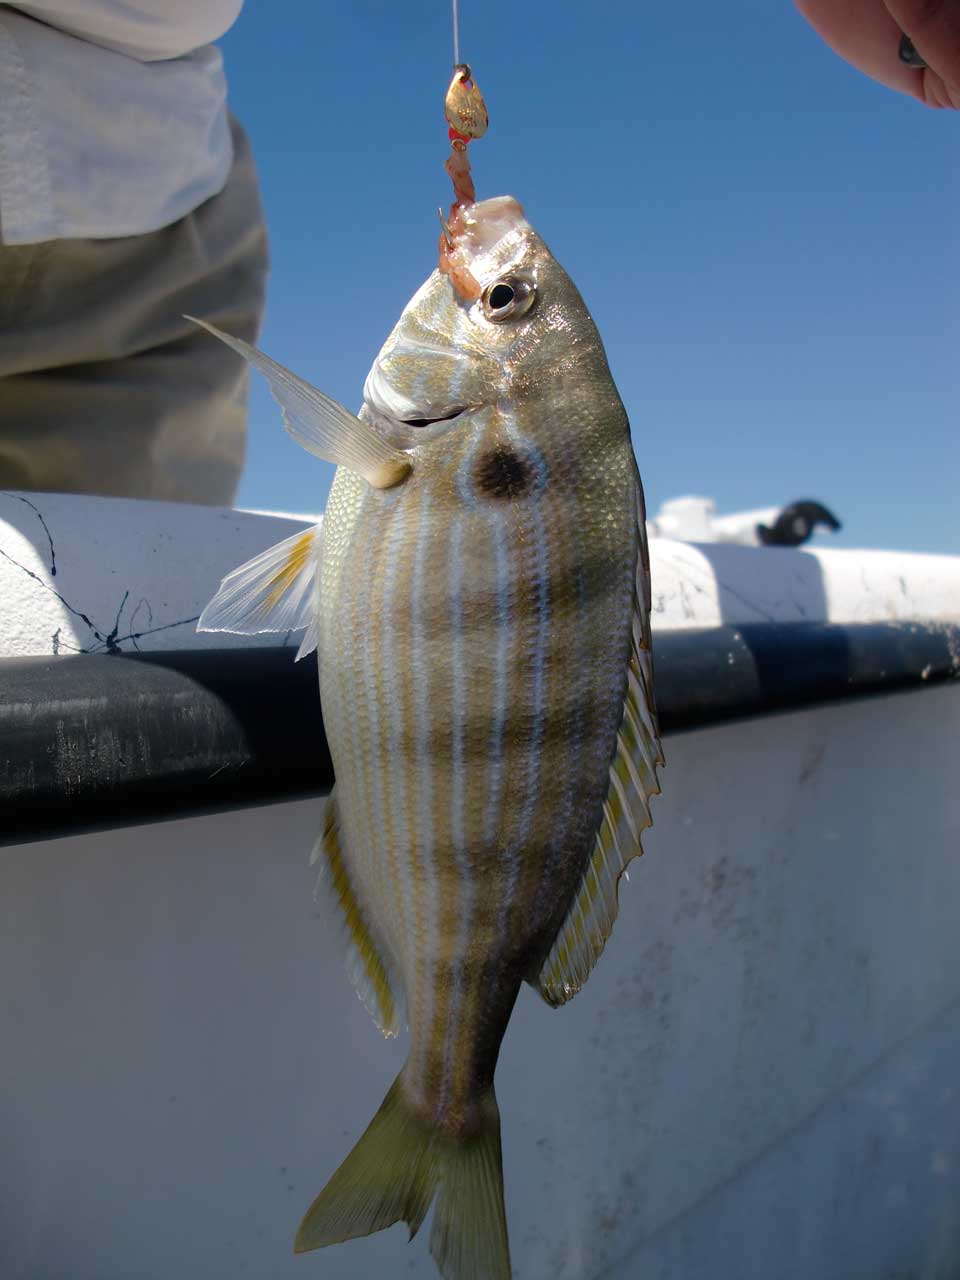 obx pinfish fishing catch recreational pigfish